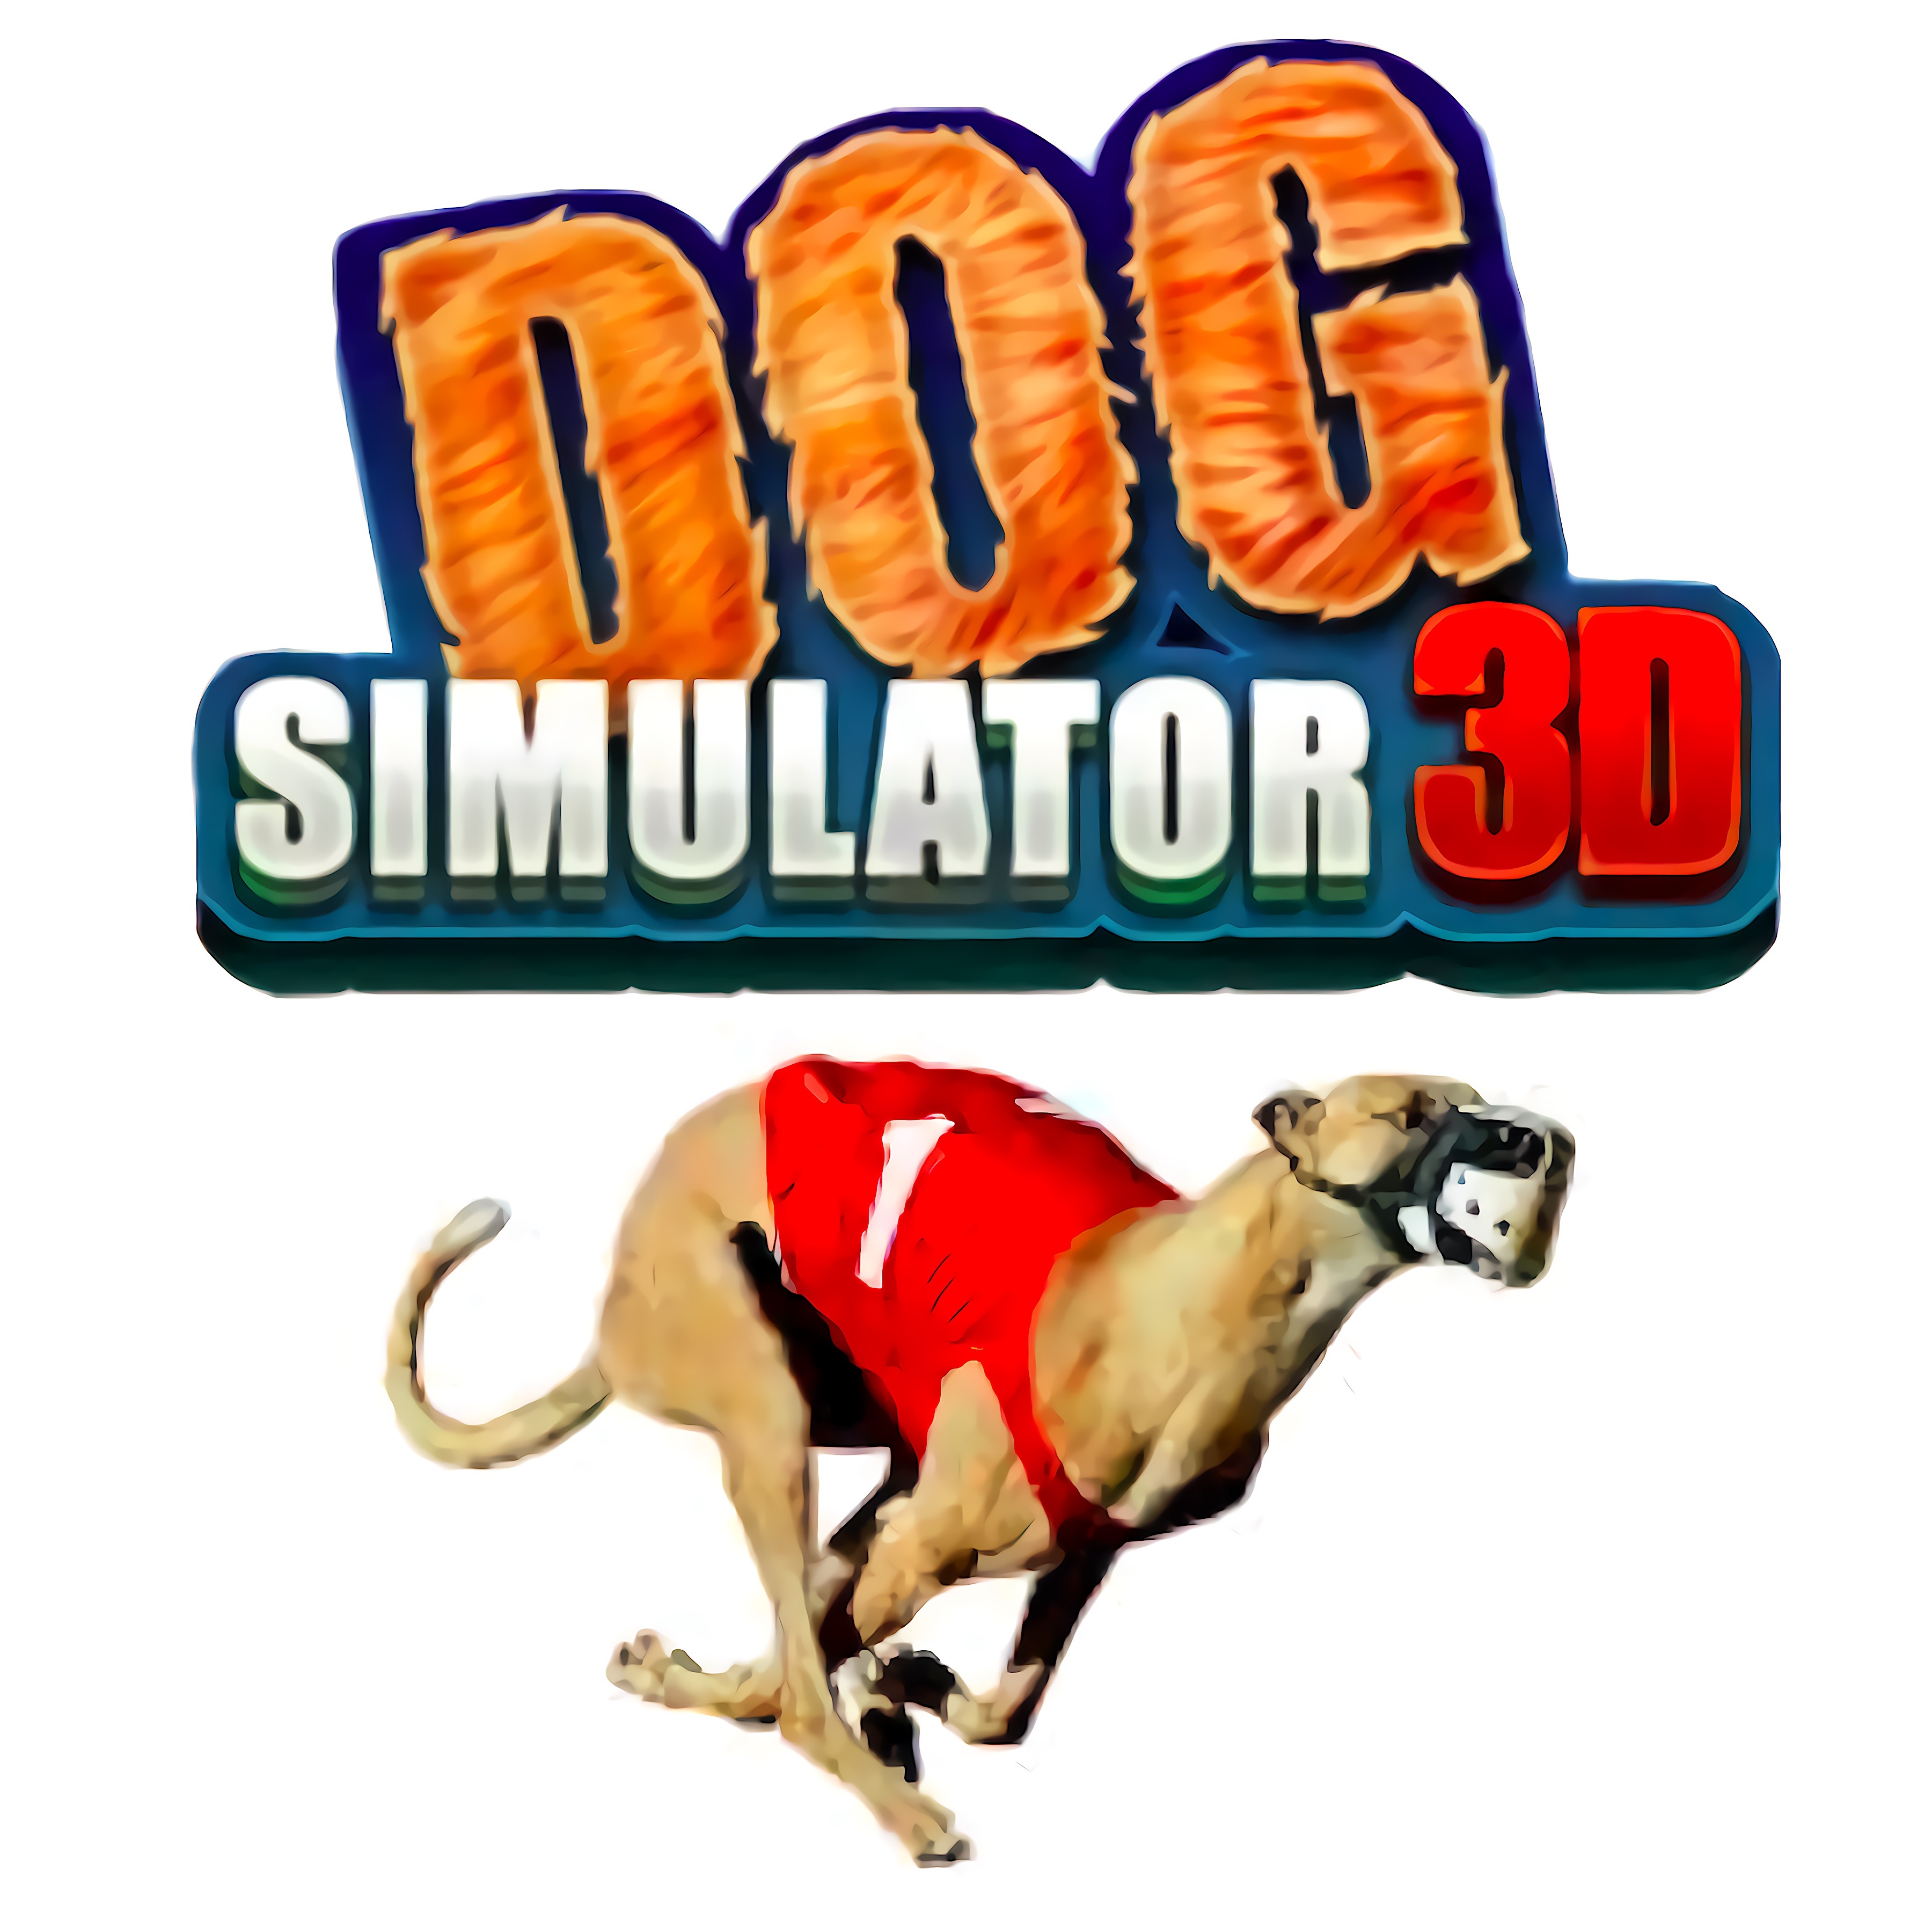 Real Dog Racing Simulator